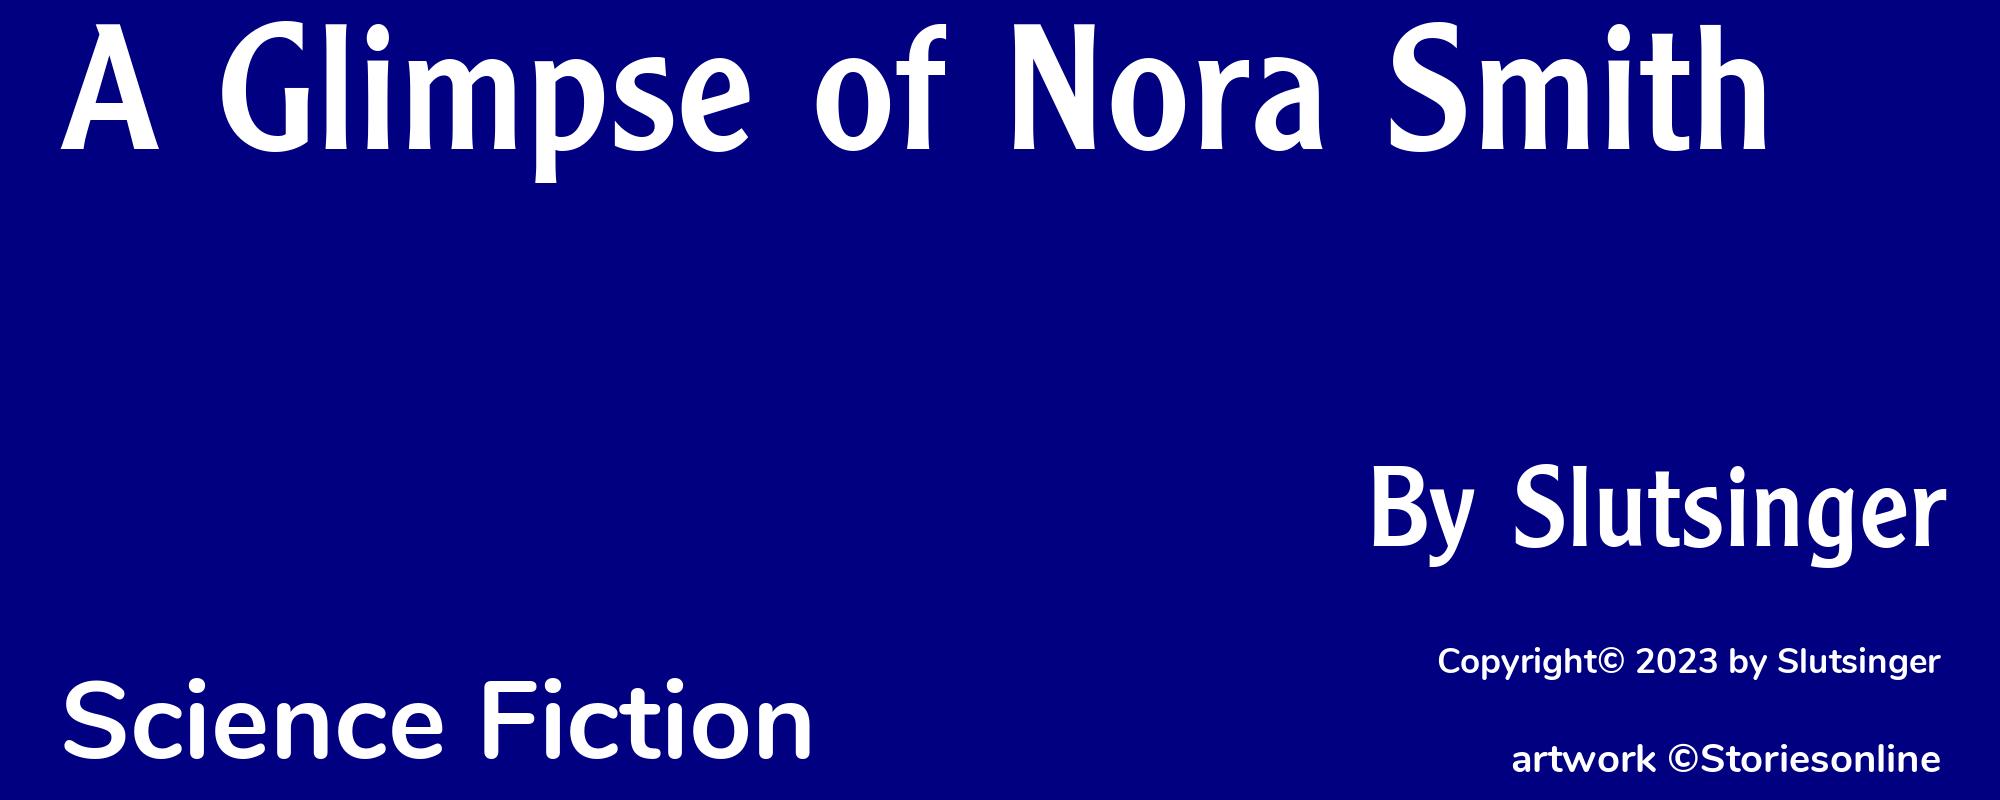 A Glimpse of Nora Smith - Cover